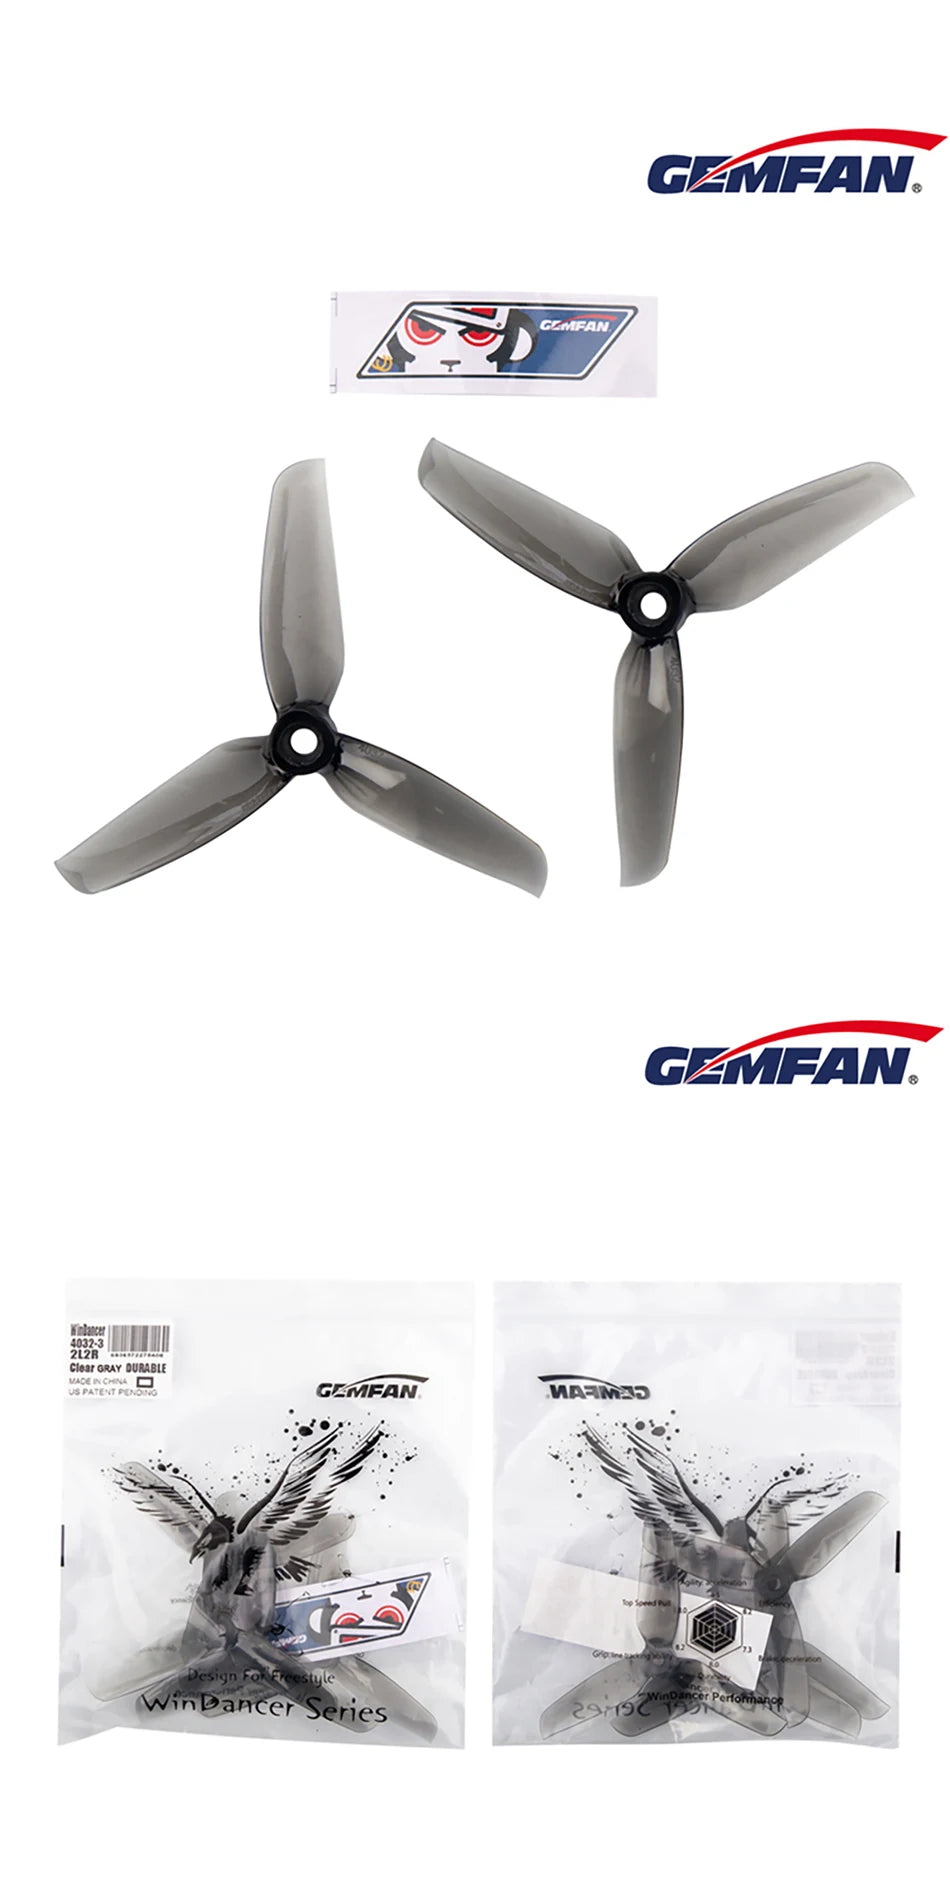 8/12Pairs Gemfan WinDancer 4032-Blade Propeller, GCMFAN MAAMJJ Design Fo WinDancer Series 29;(5